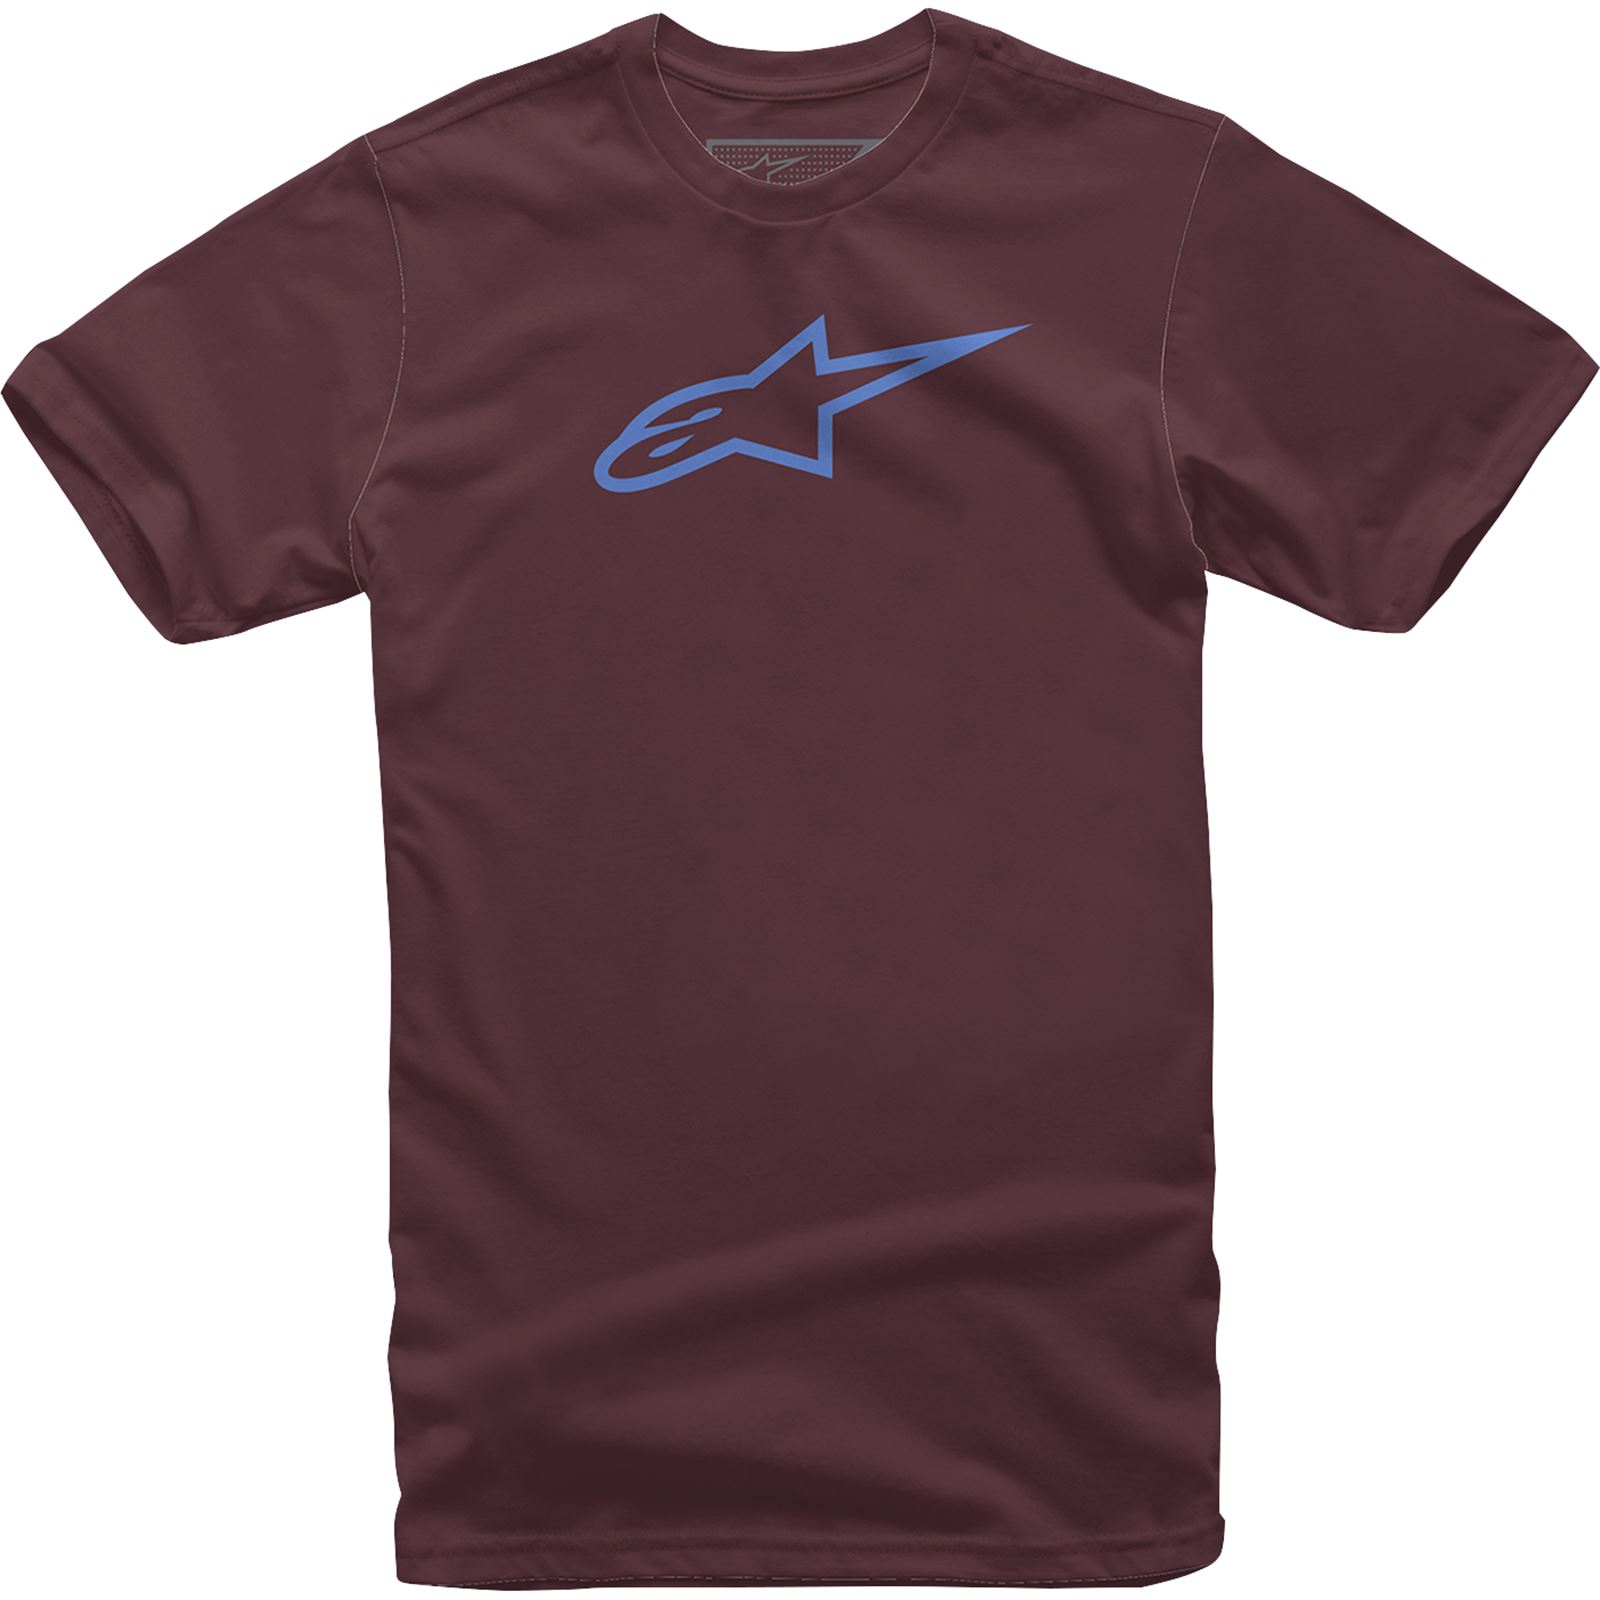 Alpinestars Ageless T-Shirt - Maroon/Blue - Large